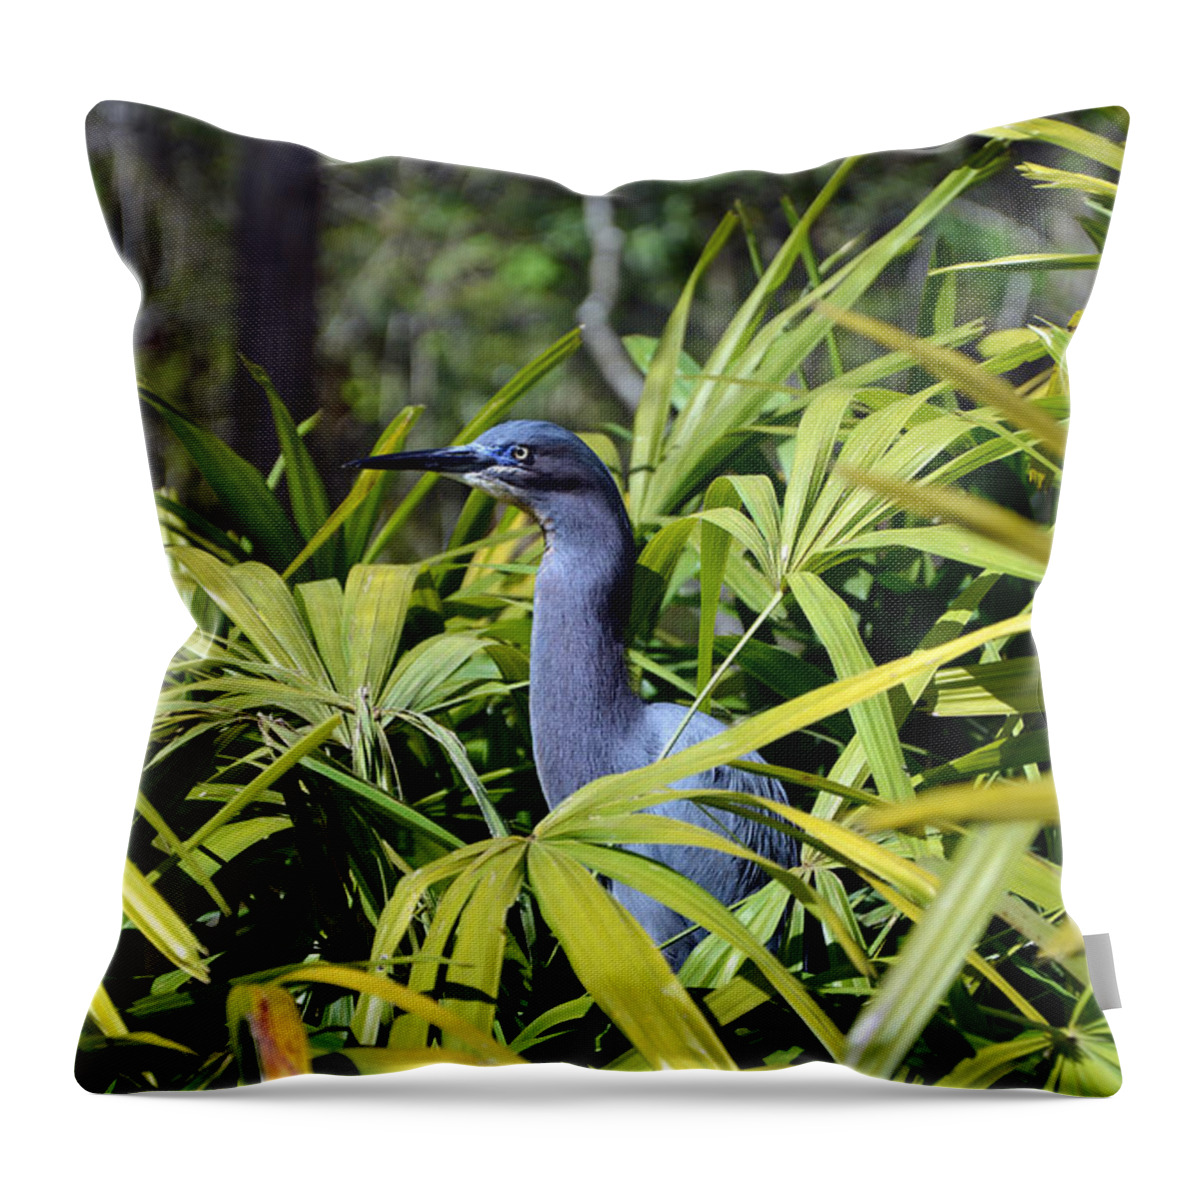 Little Blue Heron Throw Pillow featuring the photograph Little Blue Heron by Robert Meanor